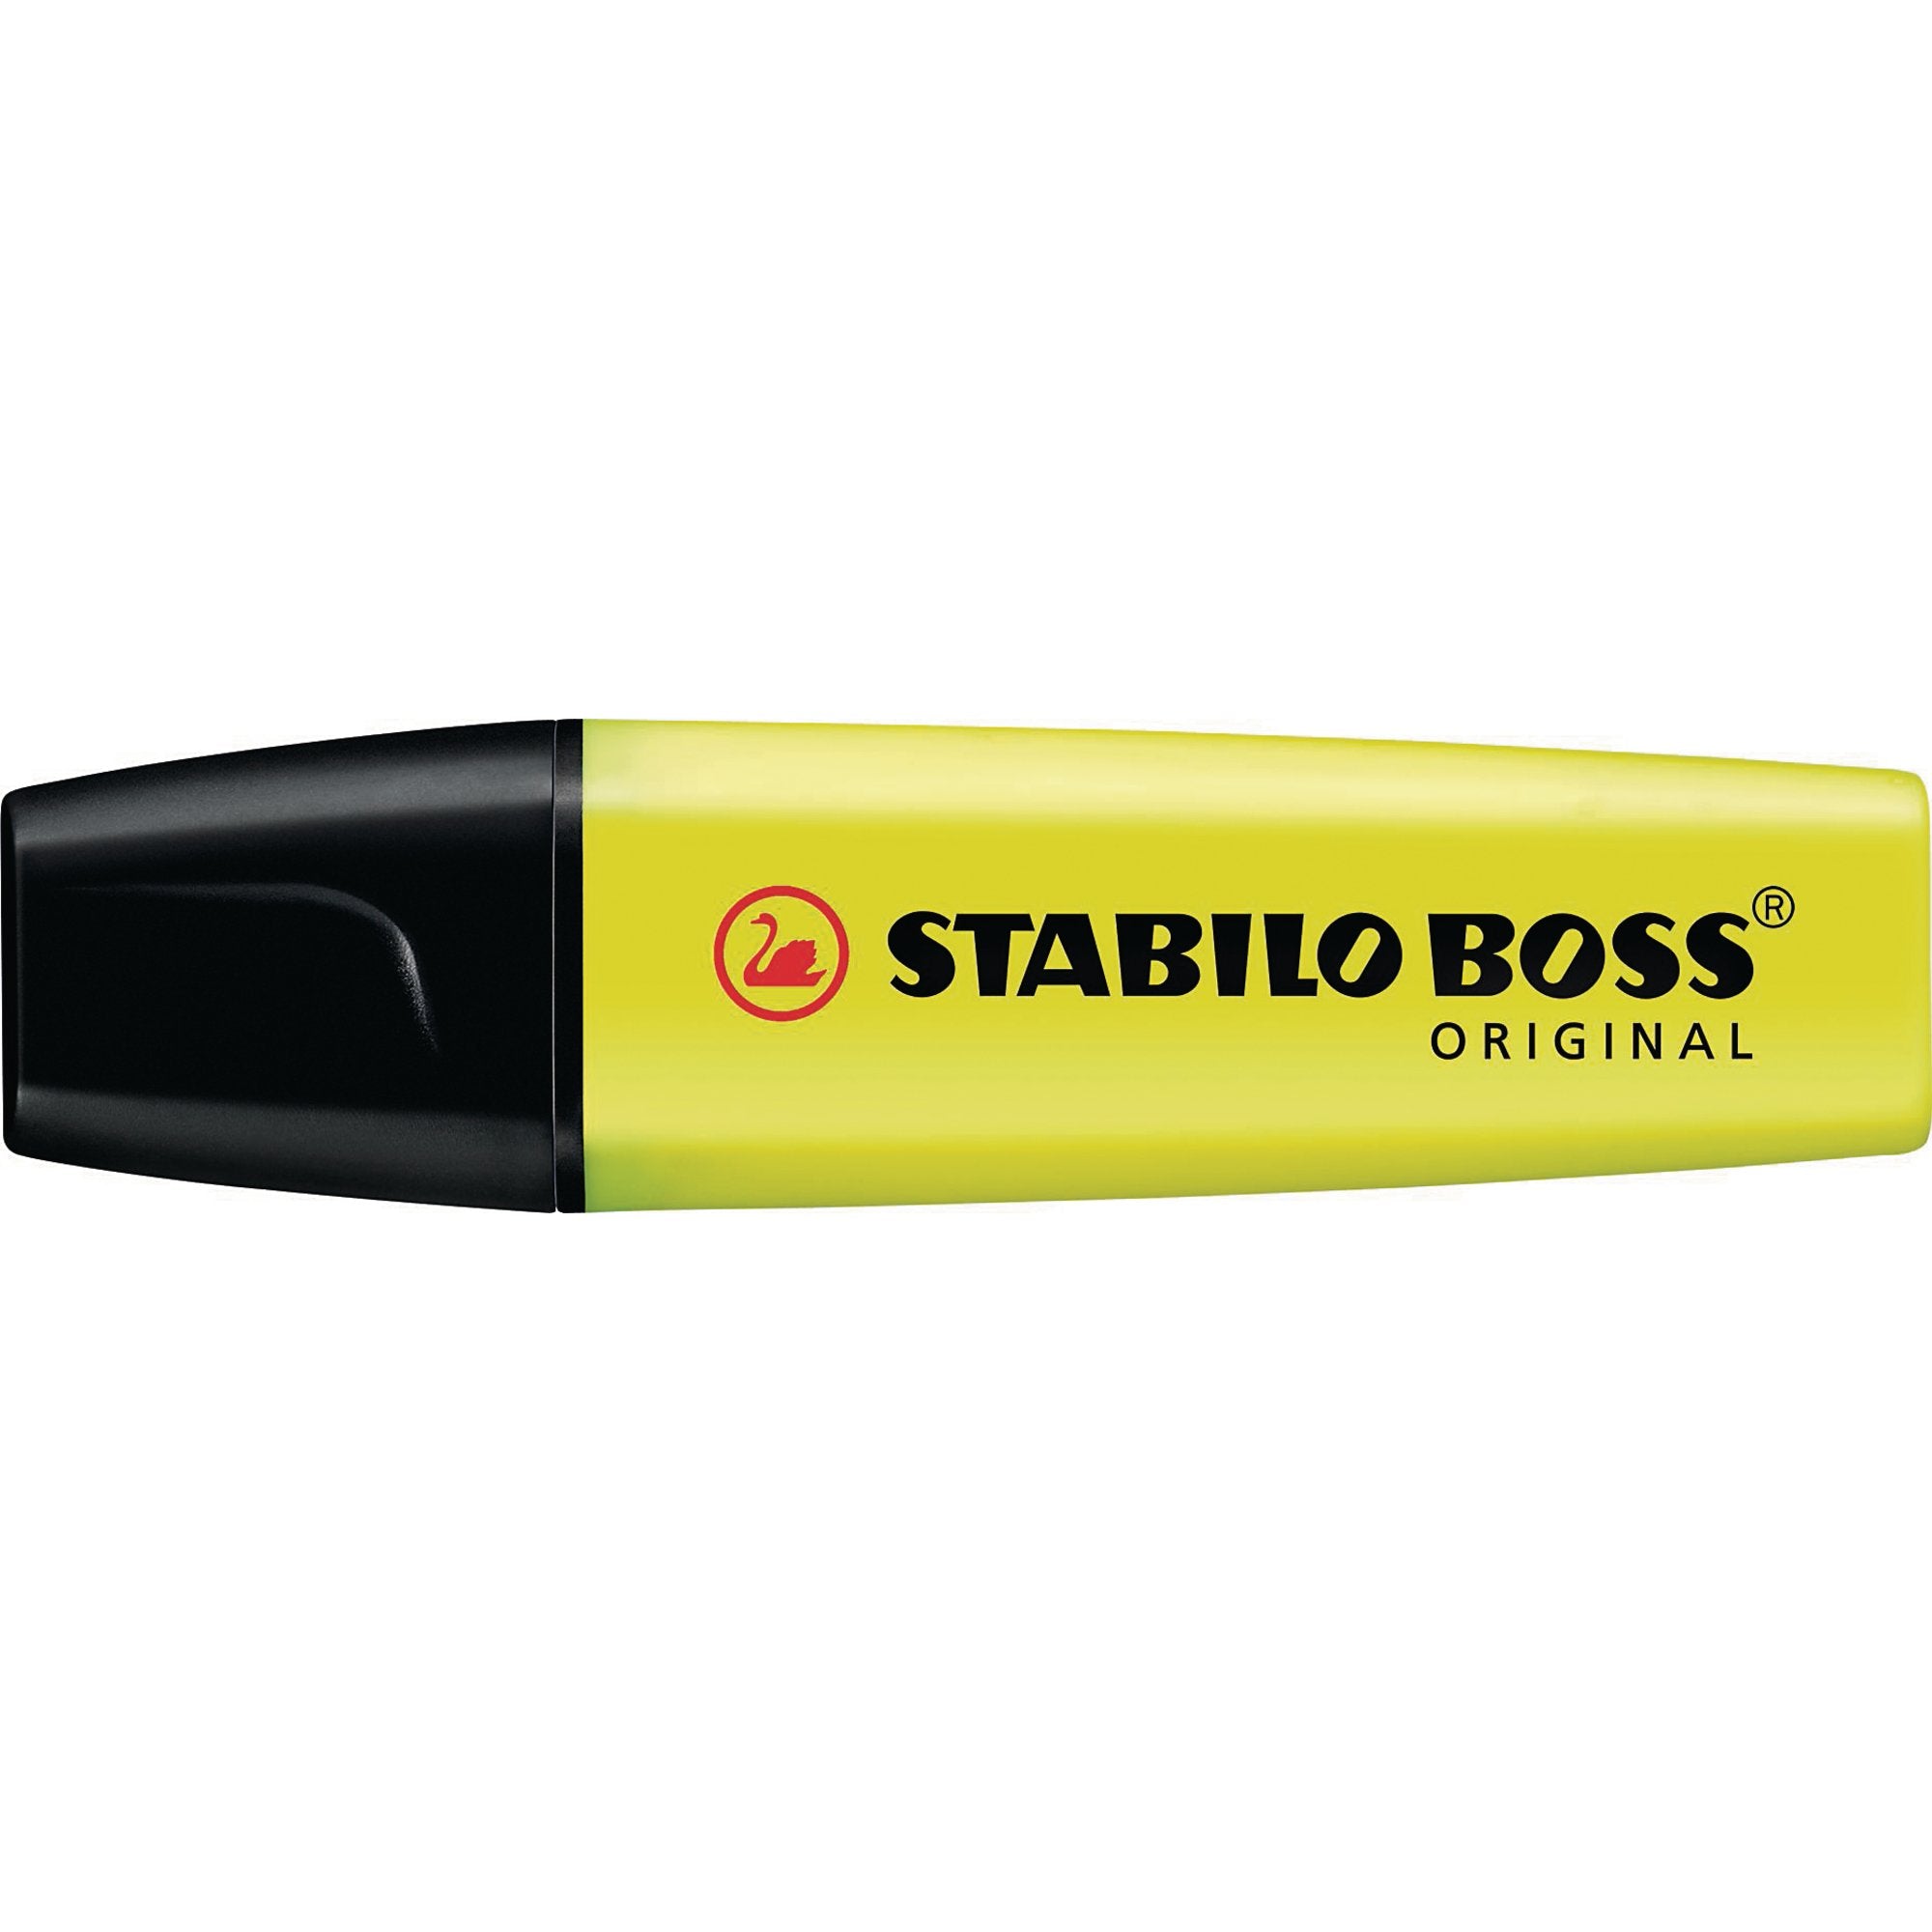 Stabilo BOSS Highlighters - Original and Pastel - at New River Art & Fiber